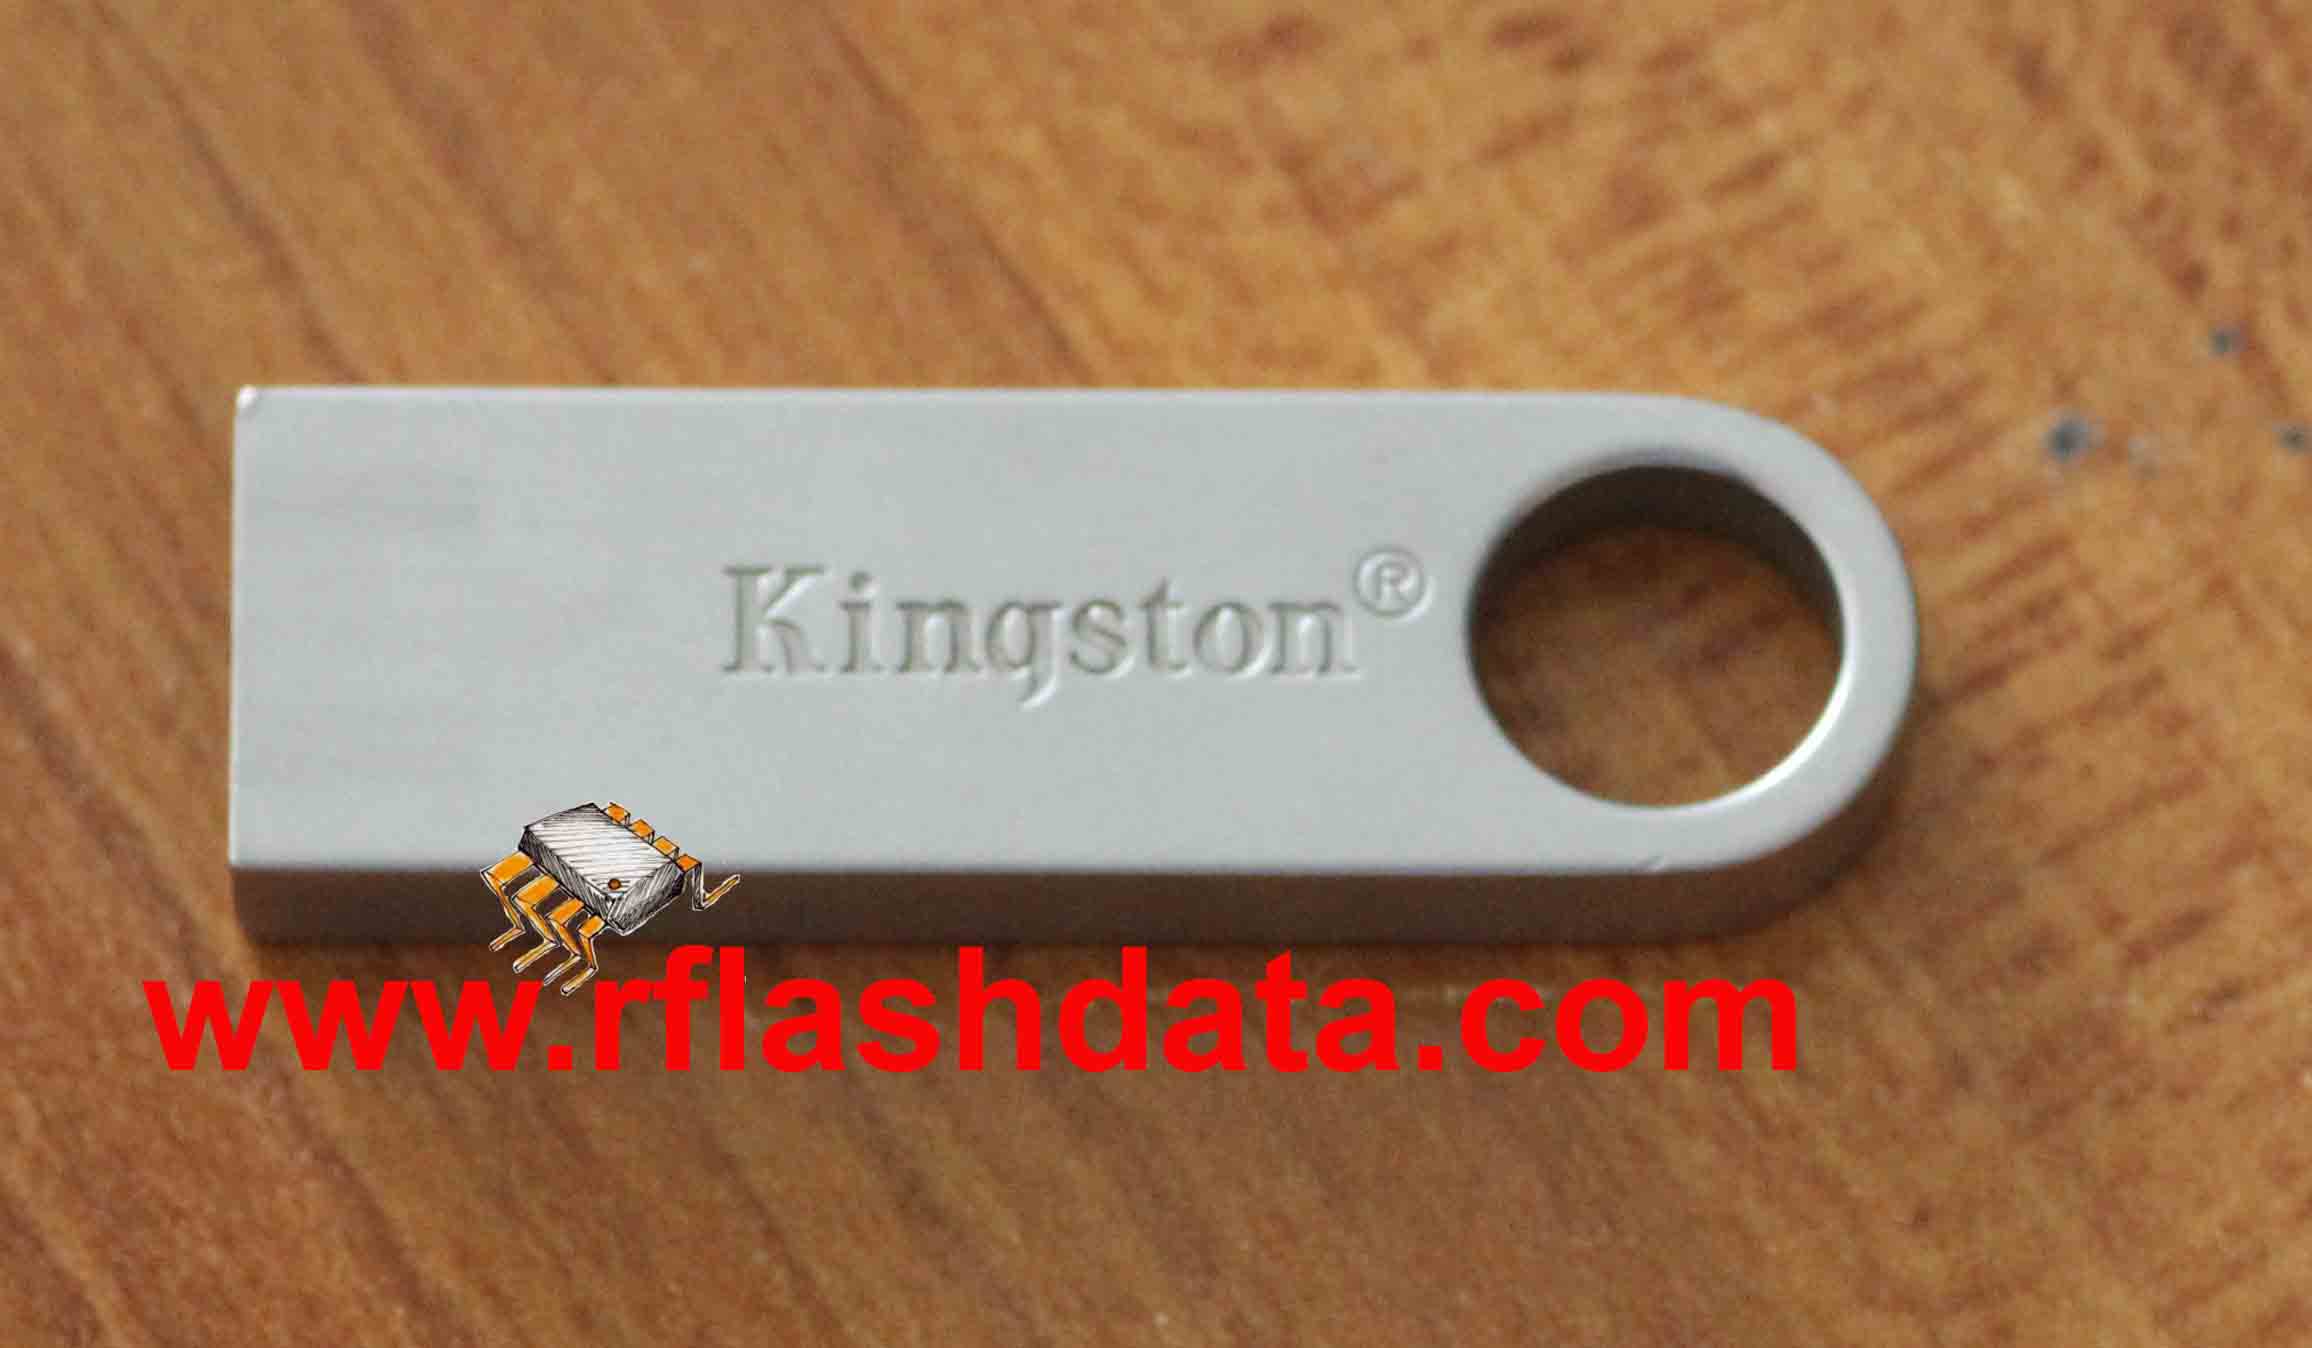 KINGSTON USB FLASH